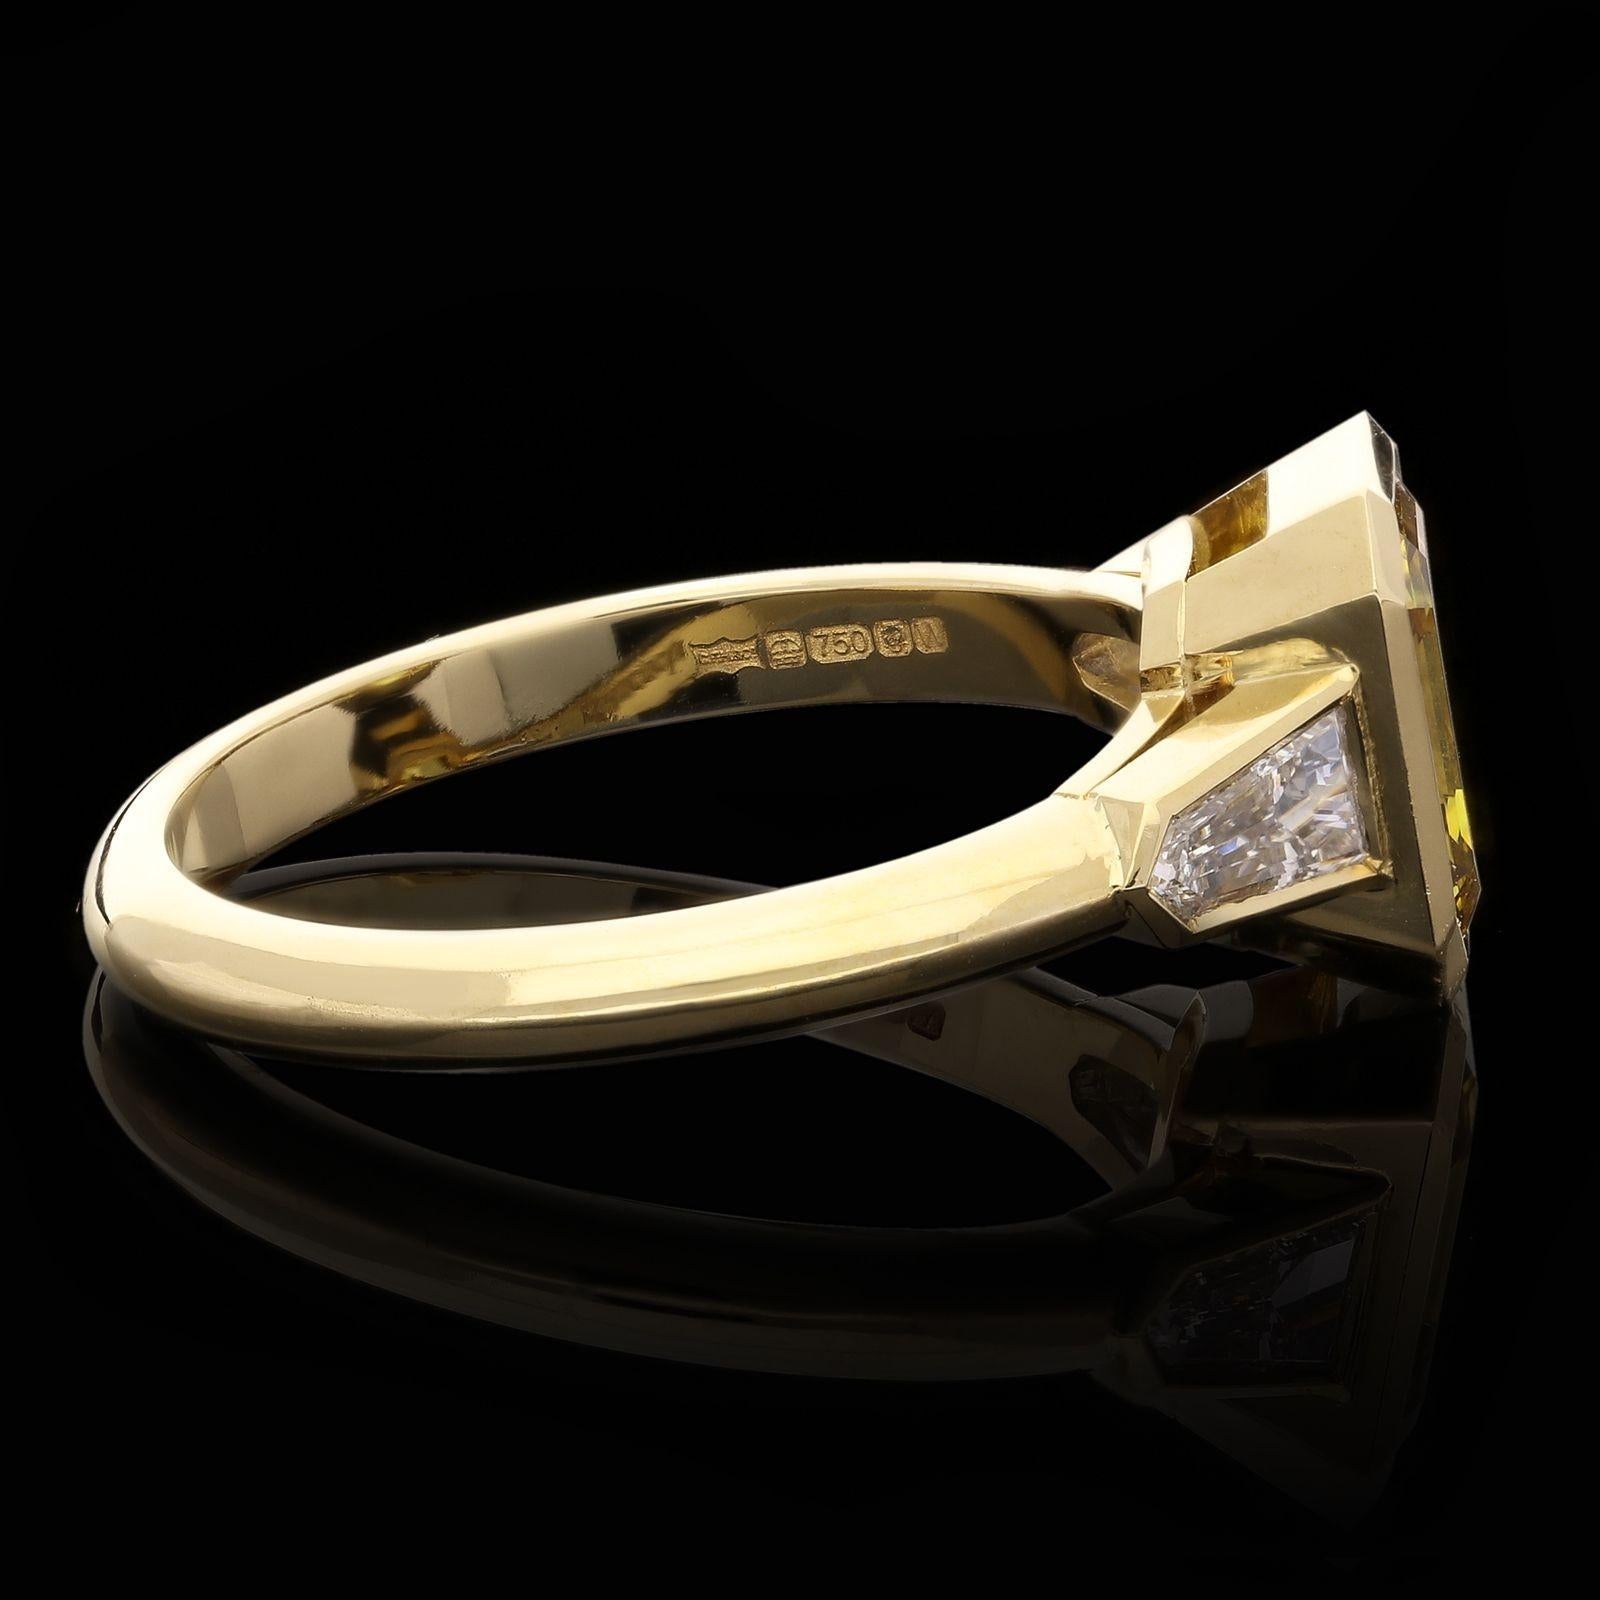 Emerald Cut Hancocks 1.52ct Fancy Deep Yellow Diamond Ring with White Diamond Shoulders For Sale